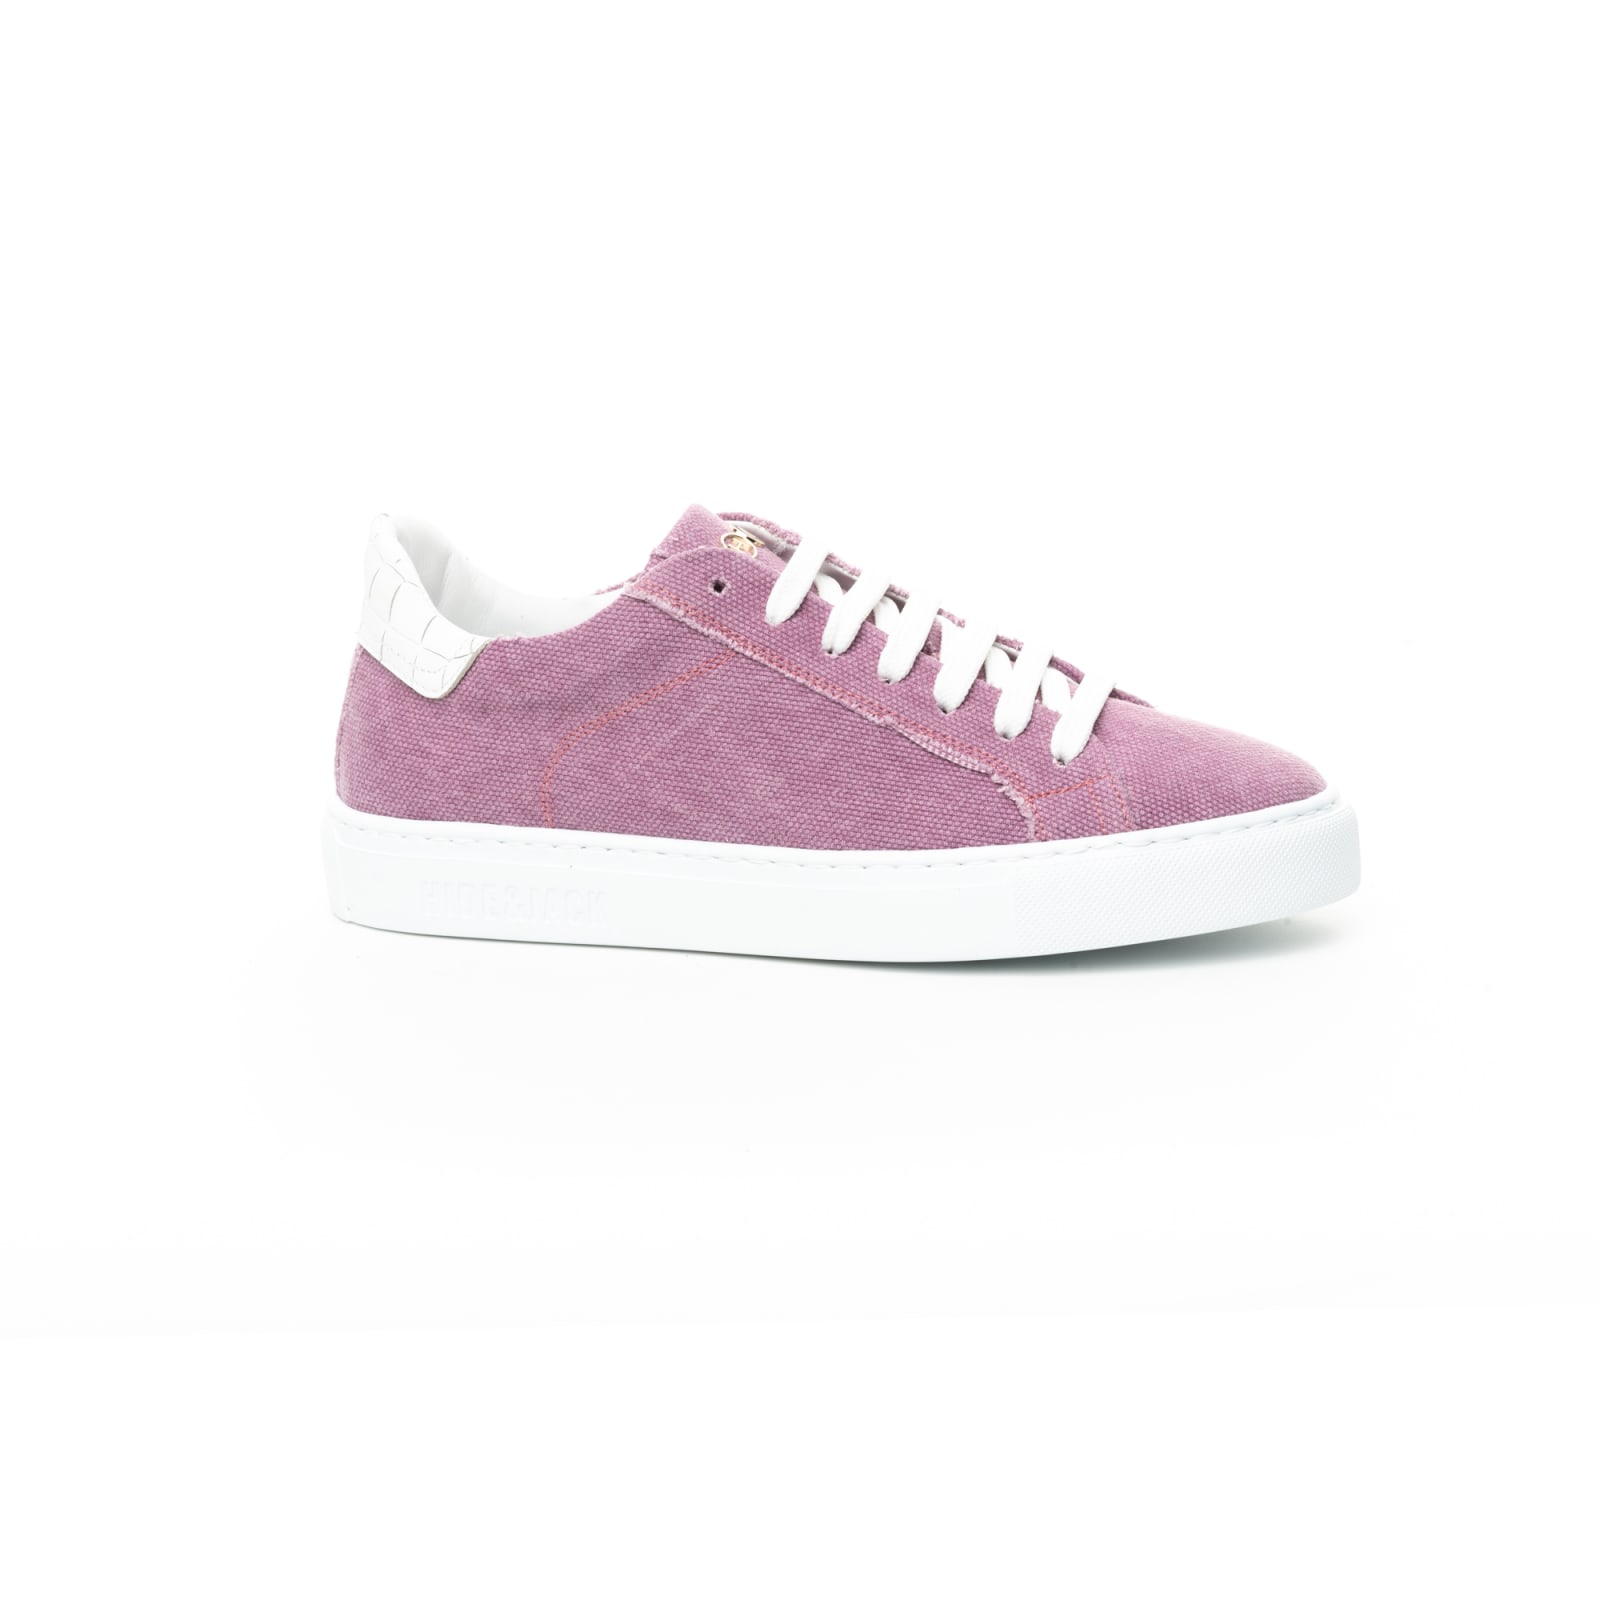 Hide & Jack Low Top Sneaker - Essence Denim Pink White